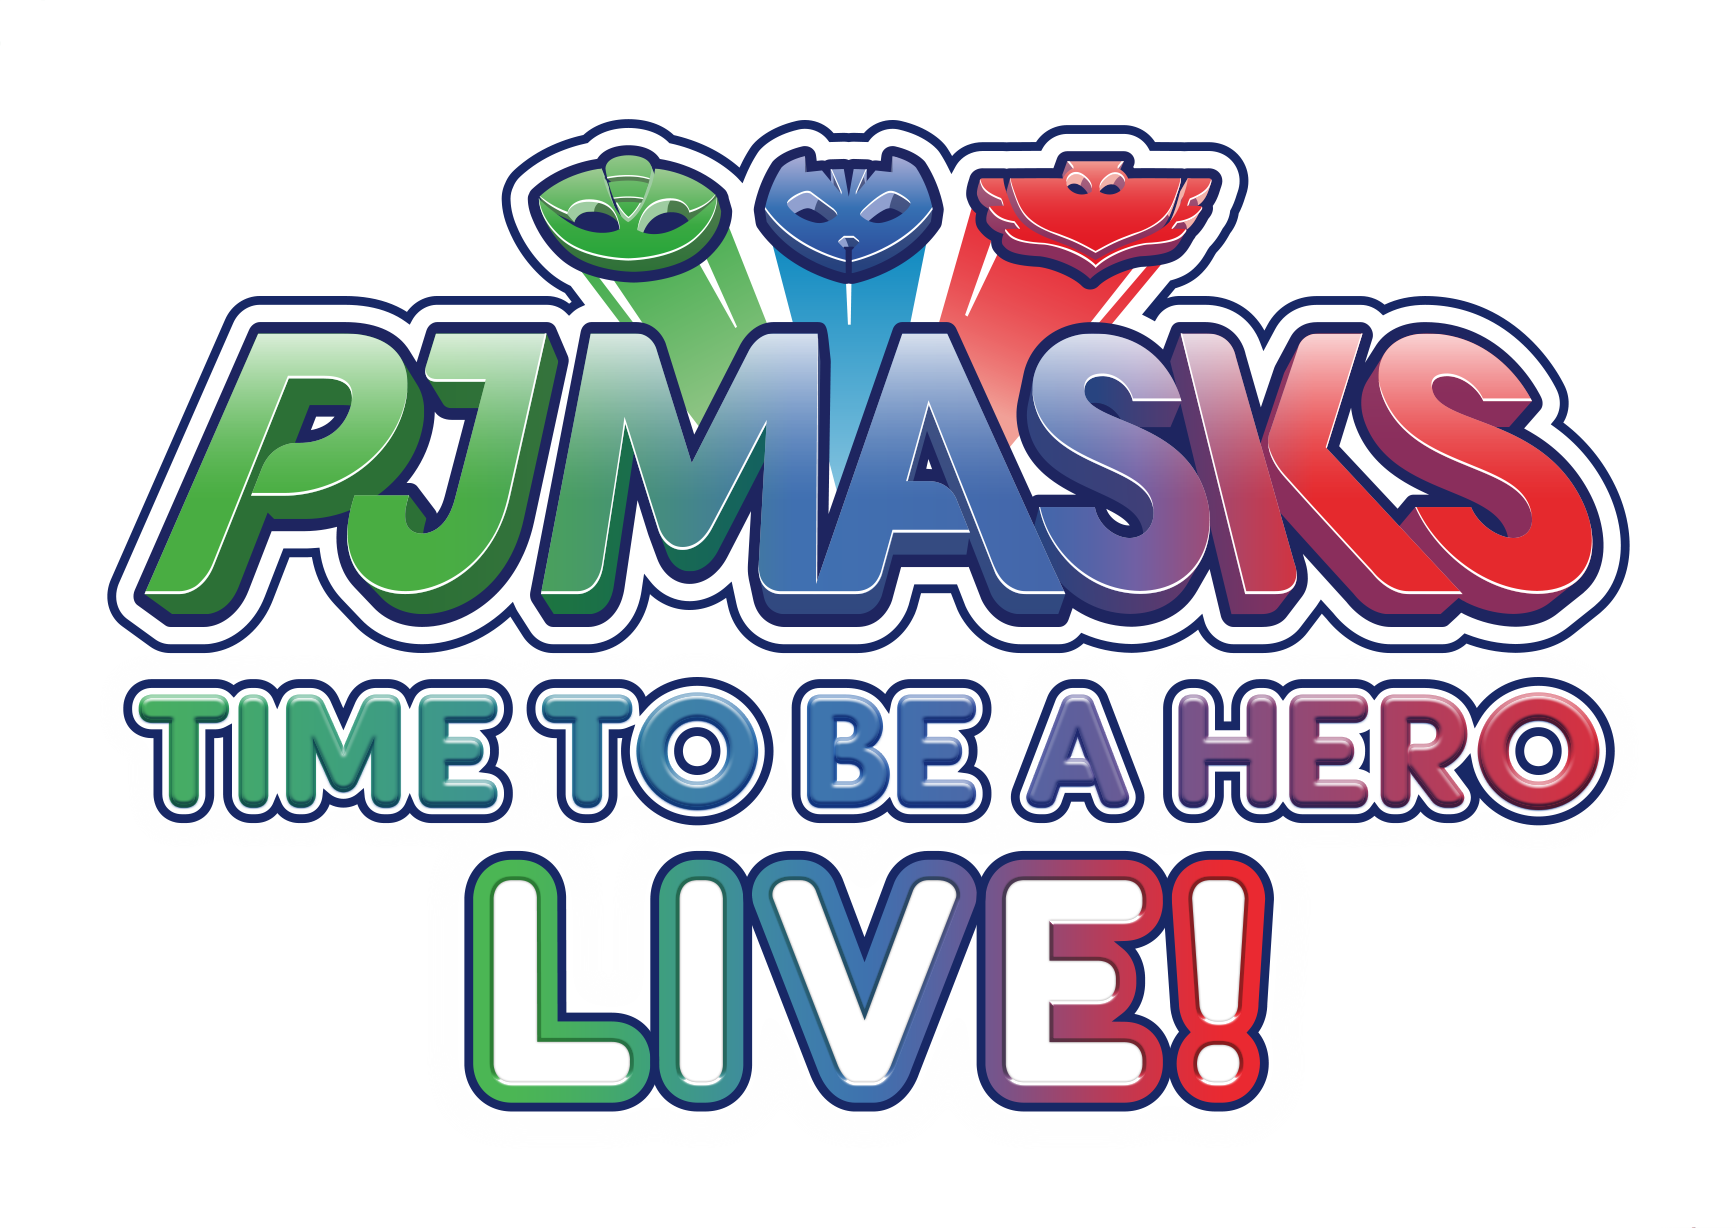 PJ Masks Logo Font